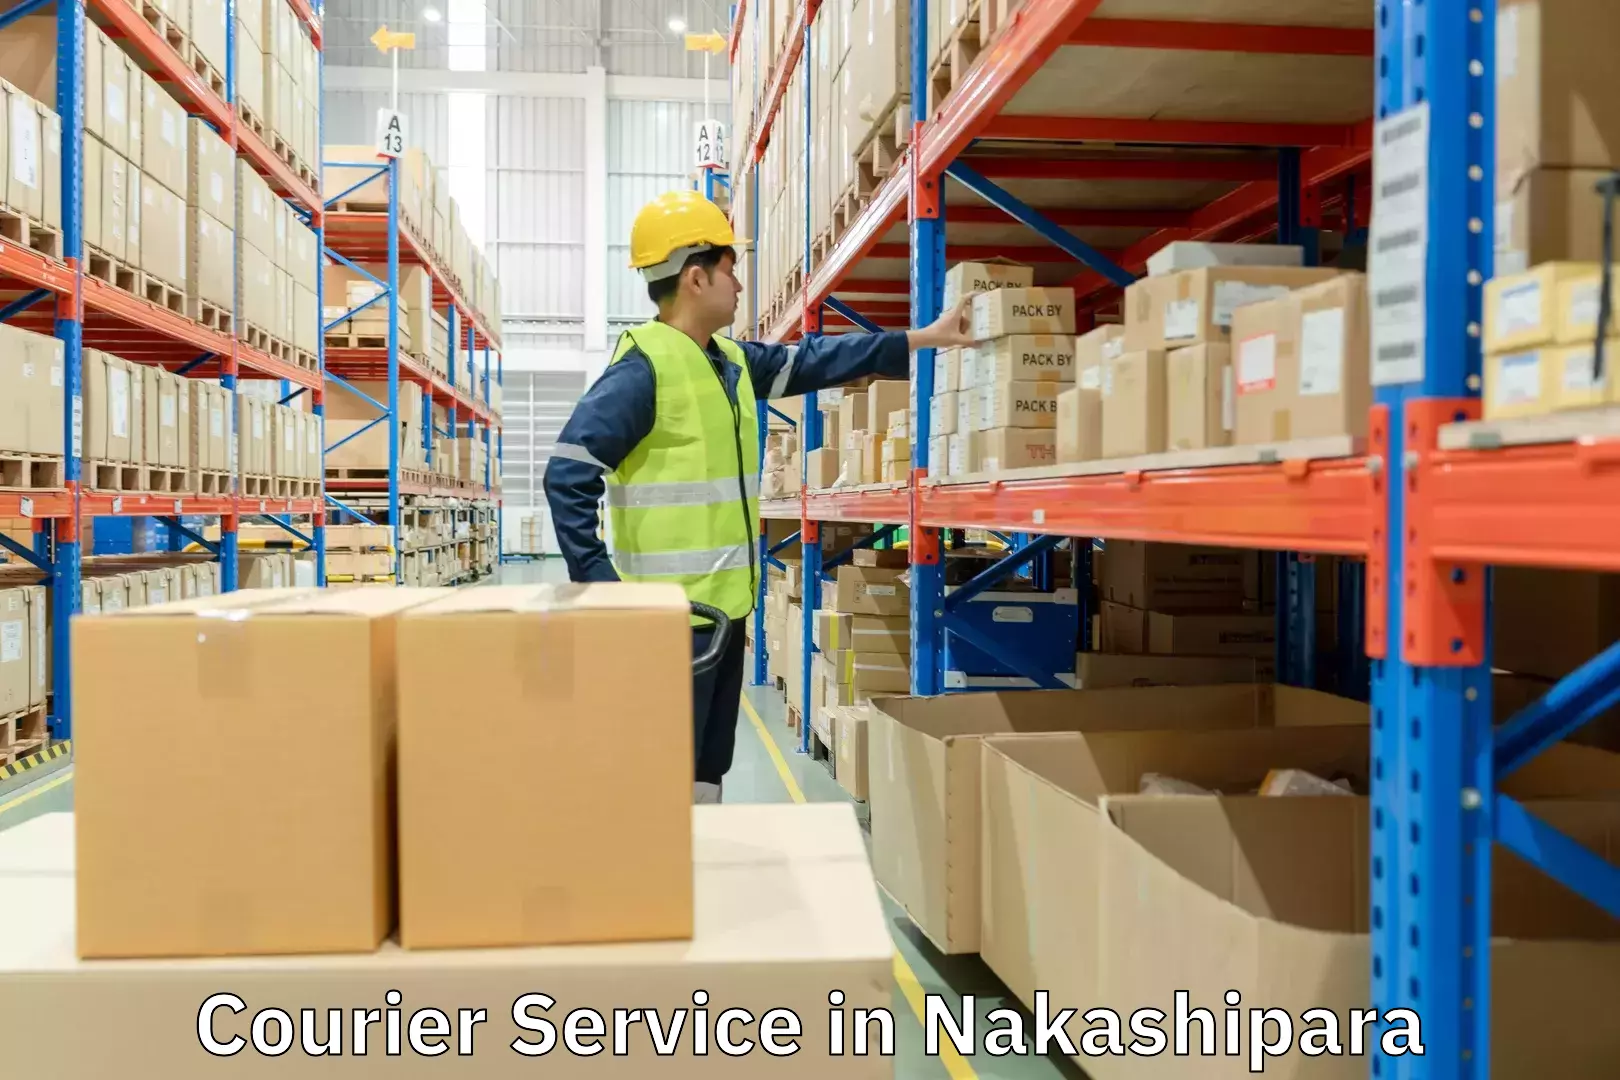 Efficient cargo services in Nakashipara